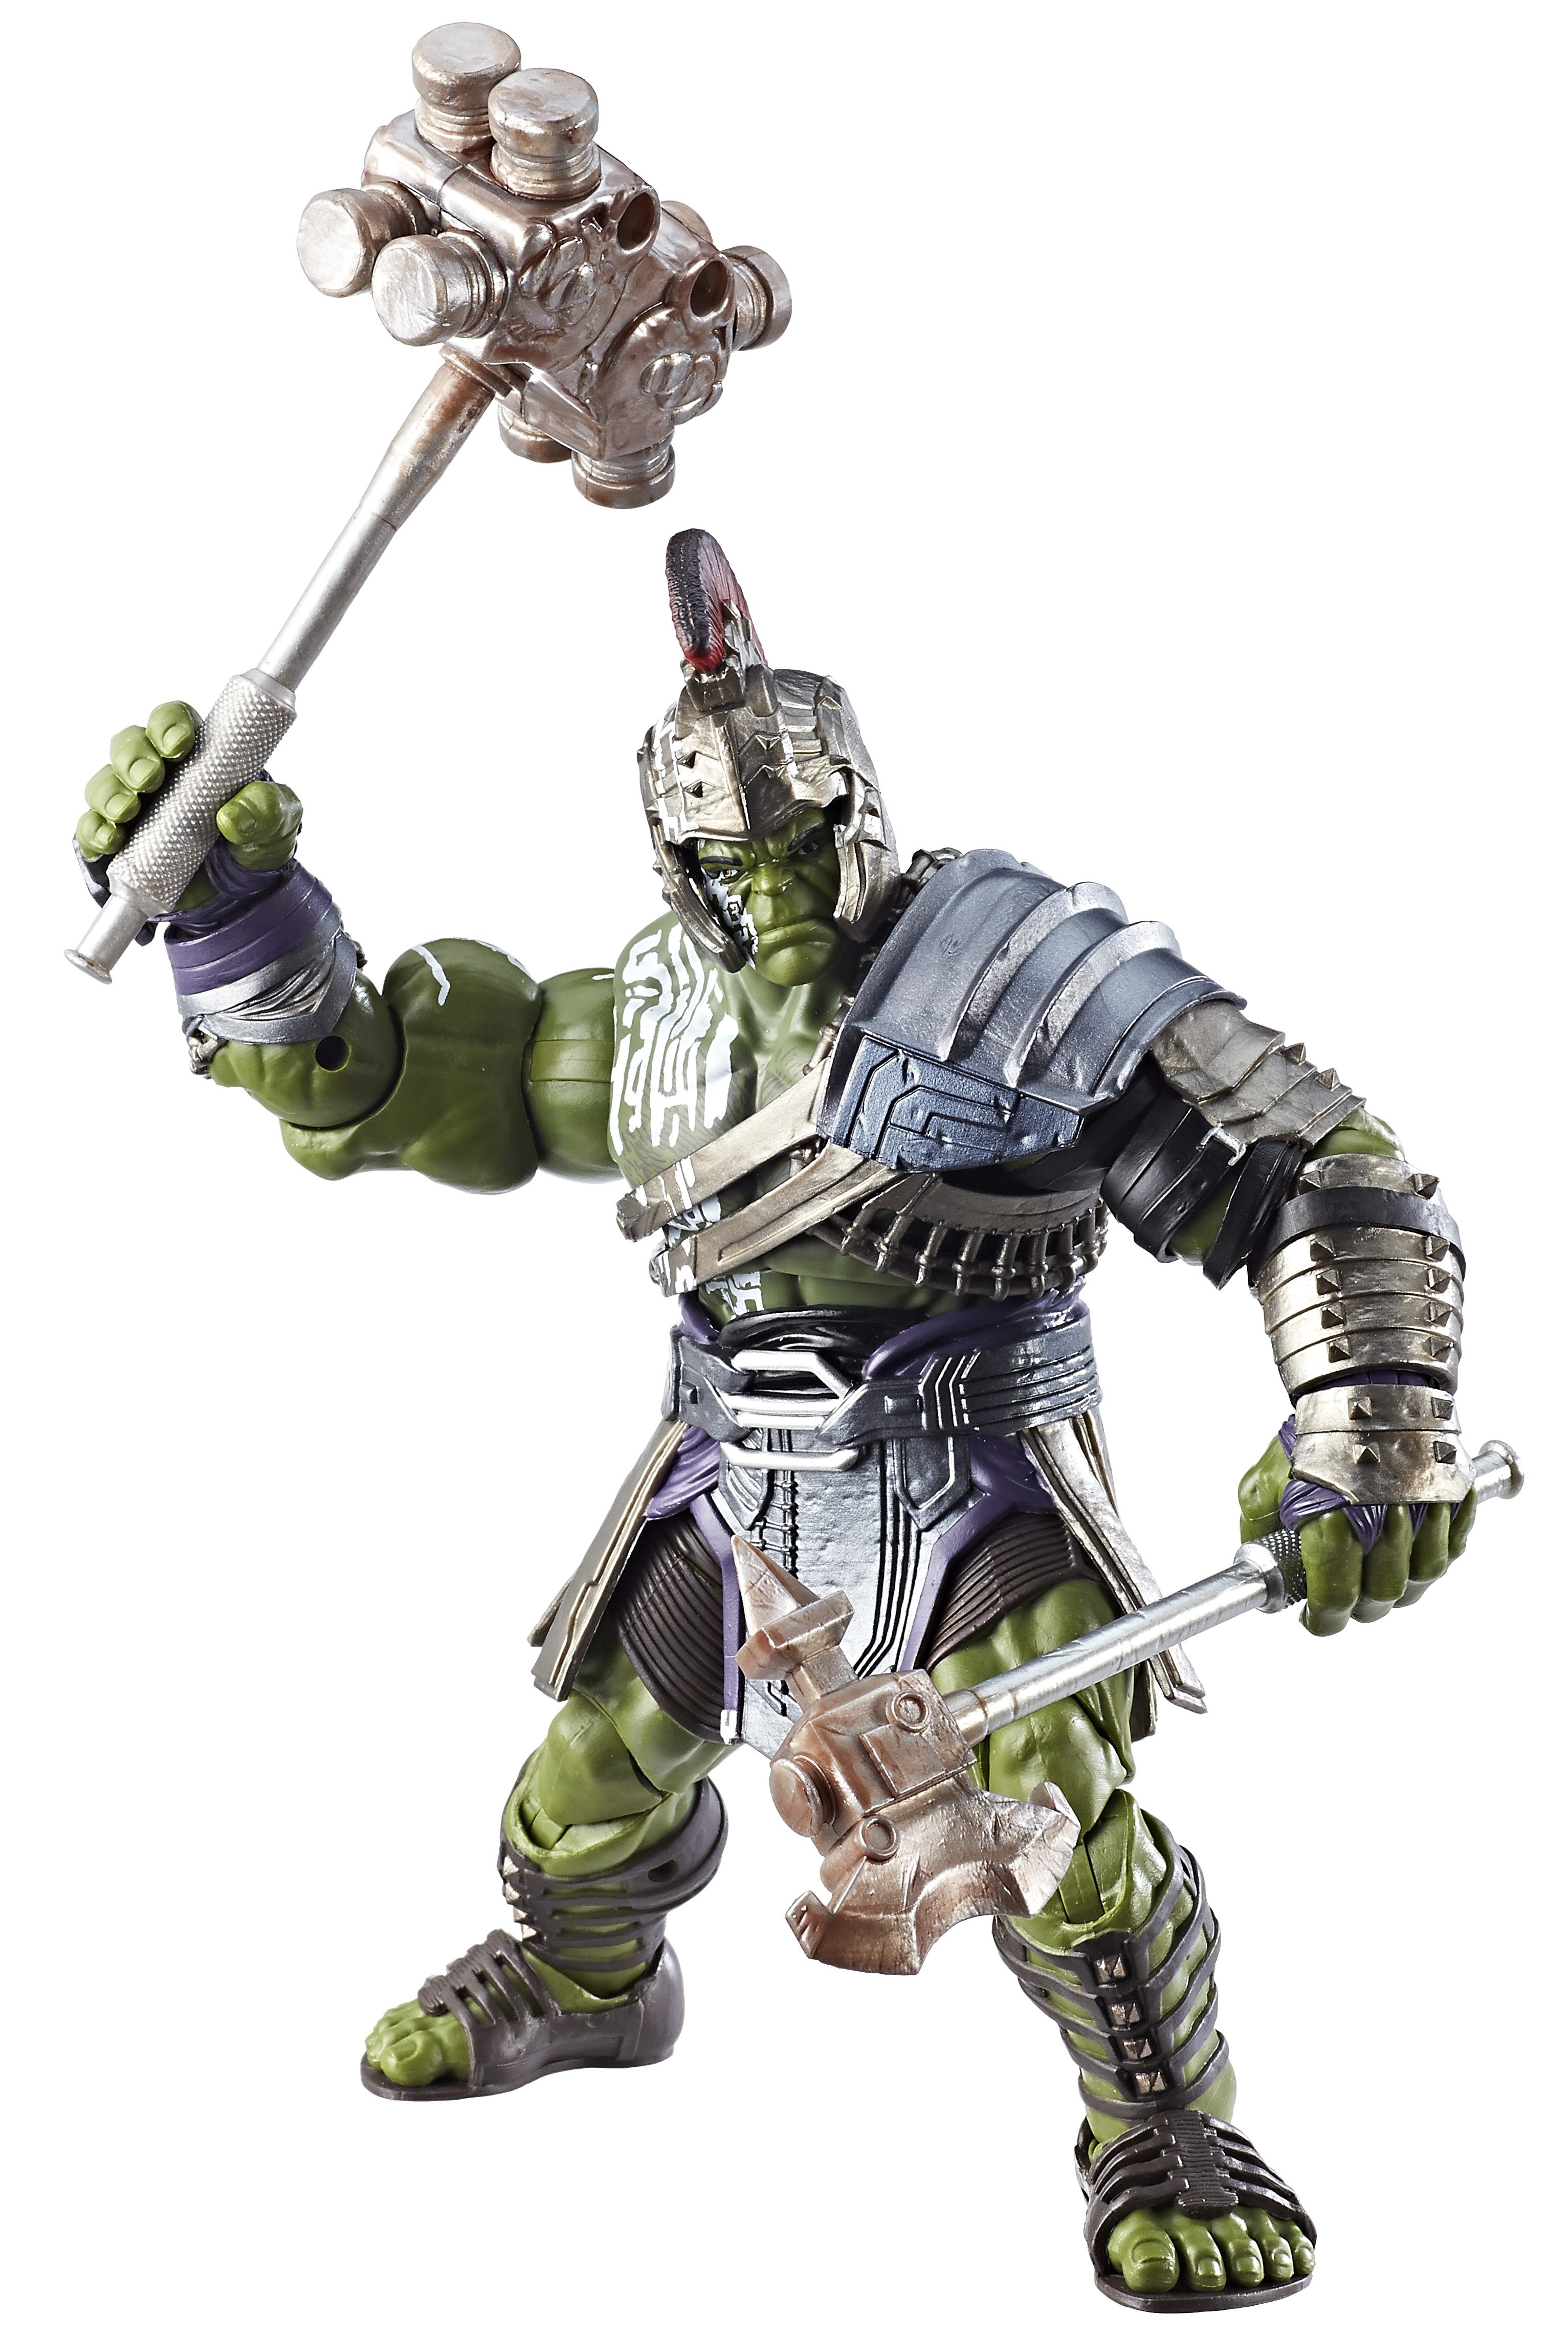 Hulk BAF Thor Ragnarok Series NEW Marvel Legends 6" Loki Action Figure